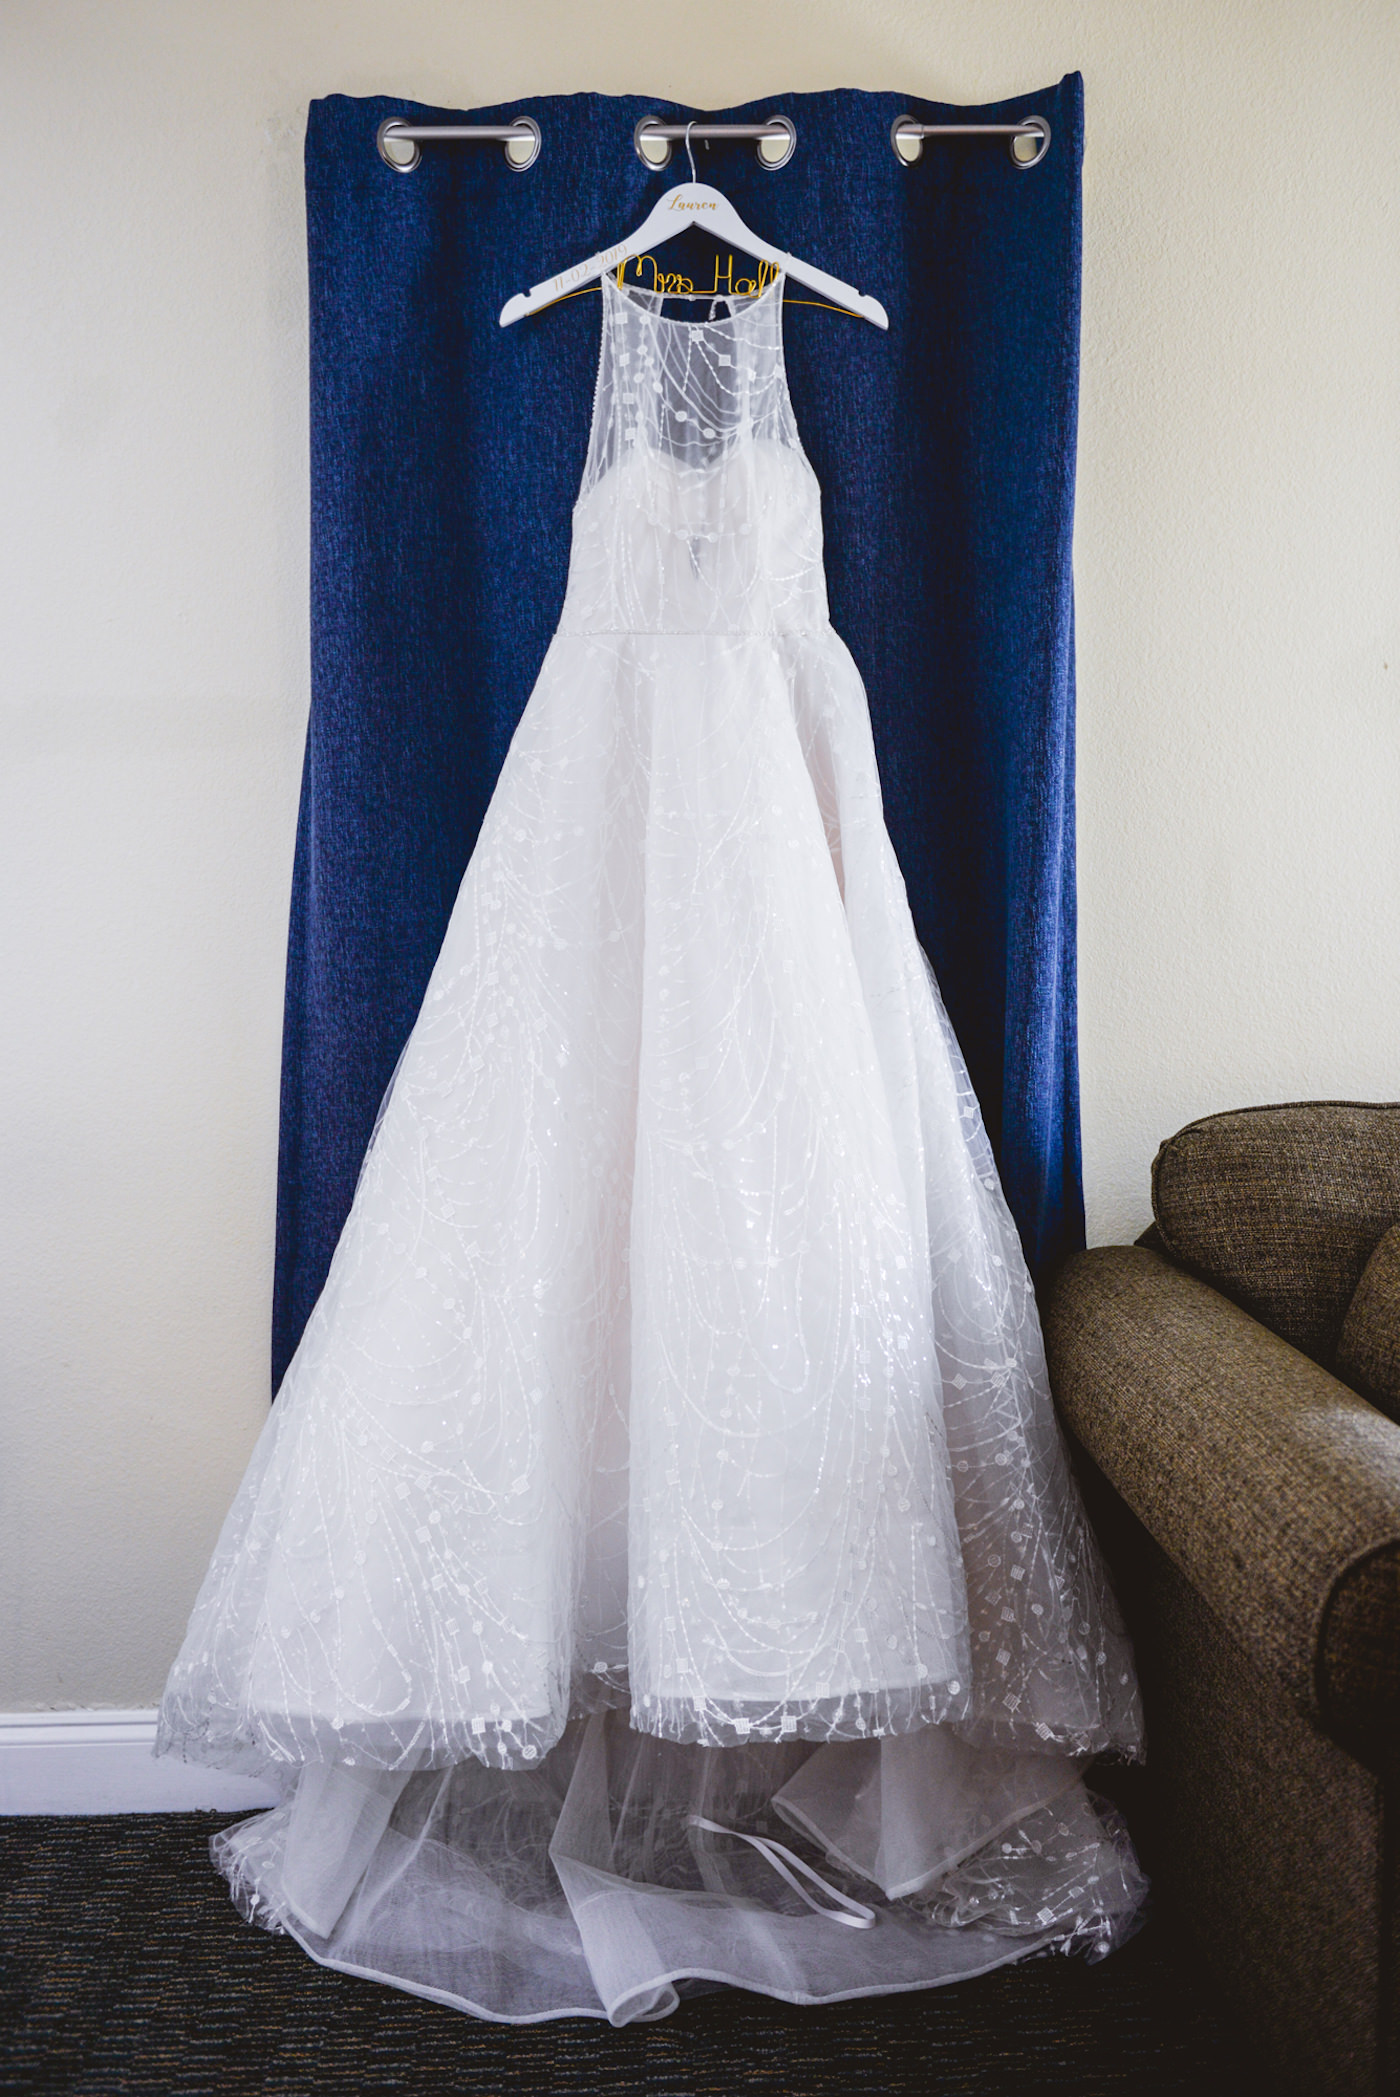 Wedding Dress Hanger Shot | White Embroidered Organza Ballgown Illusion Neck Bib Neckline Bridal Gown | Tampa Wedding Dress Shop Truly Forever Bridal